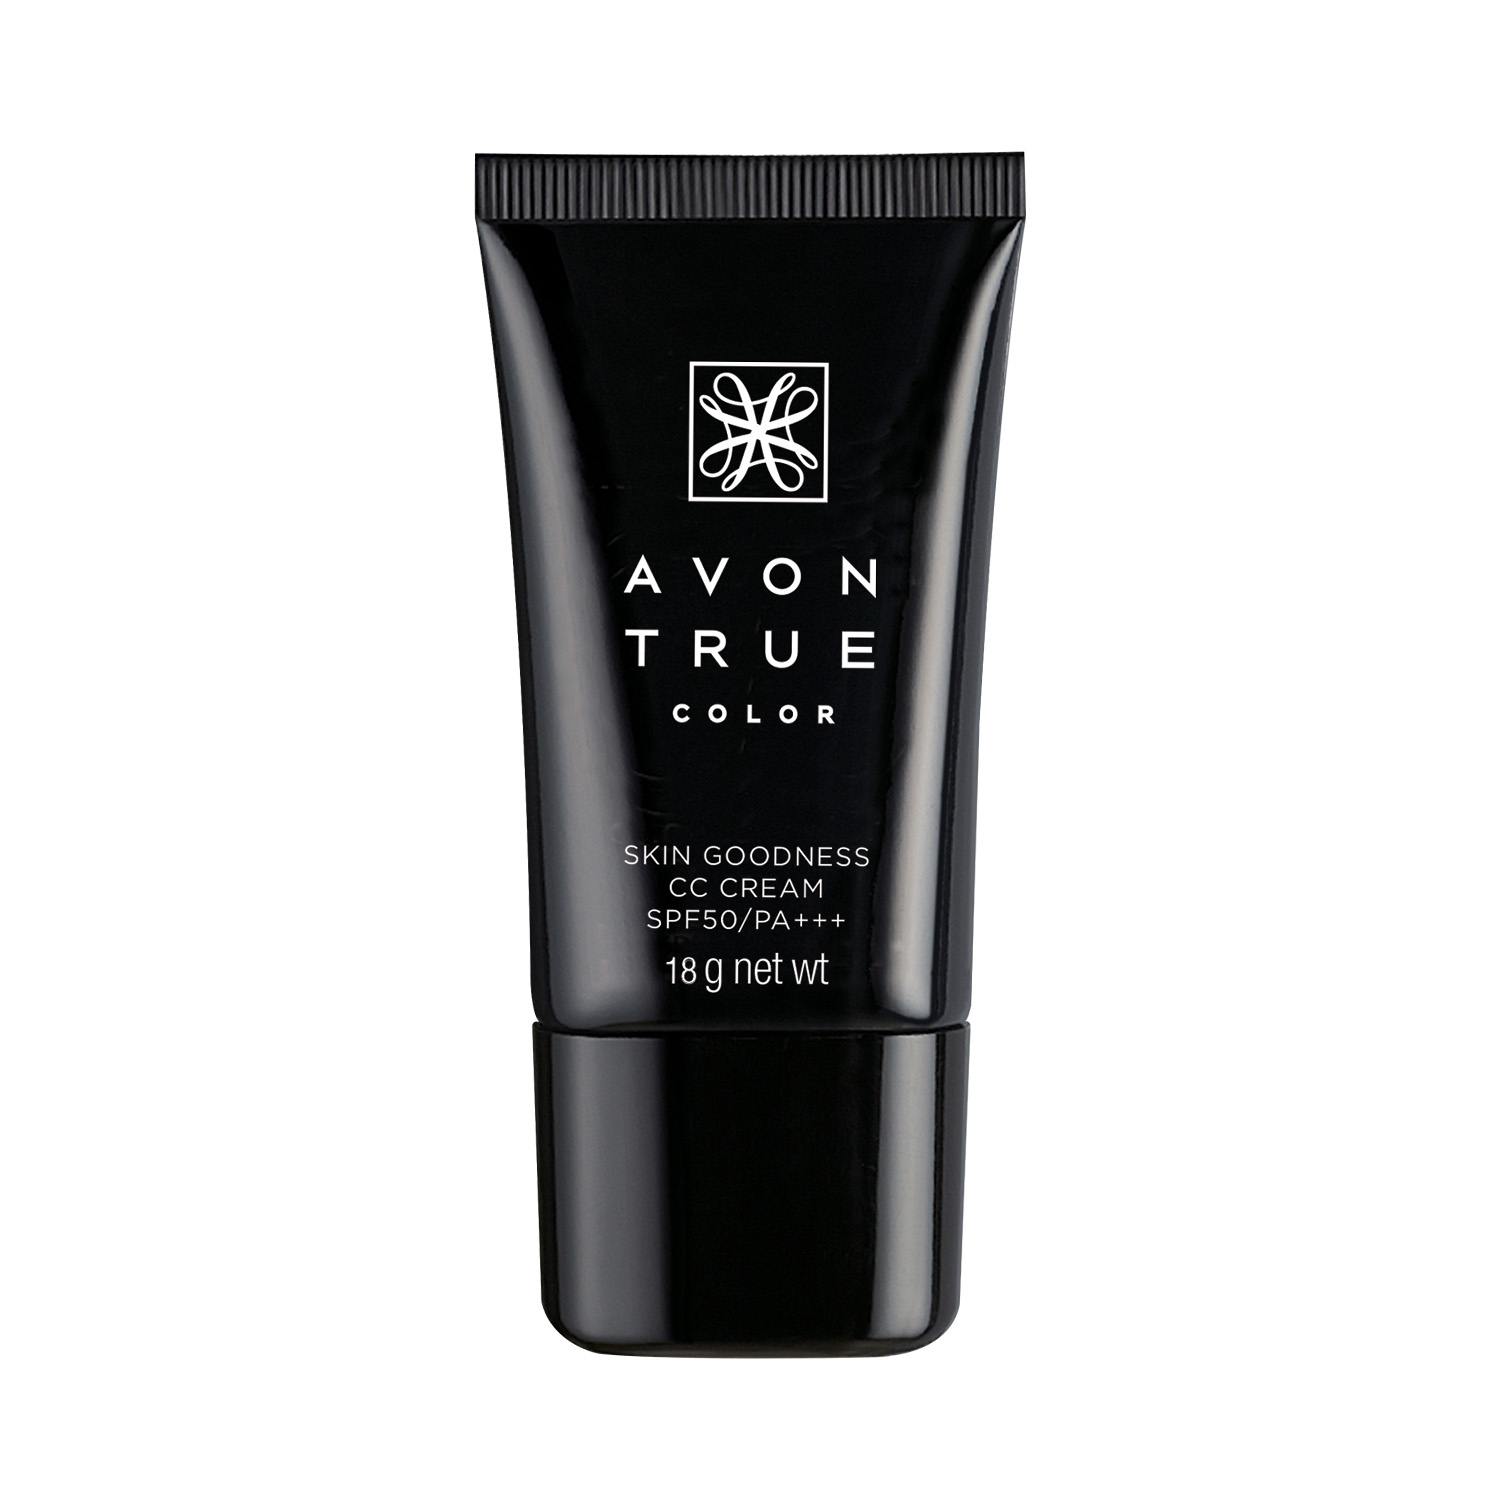 Avon | Avon True Color Skin Goodness CC Cream SPF 50 - Medium Wheat (18g)